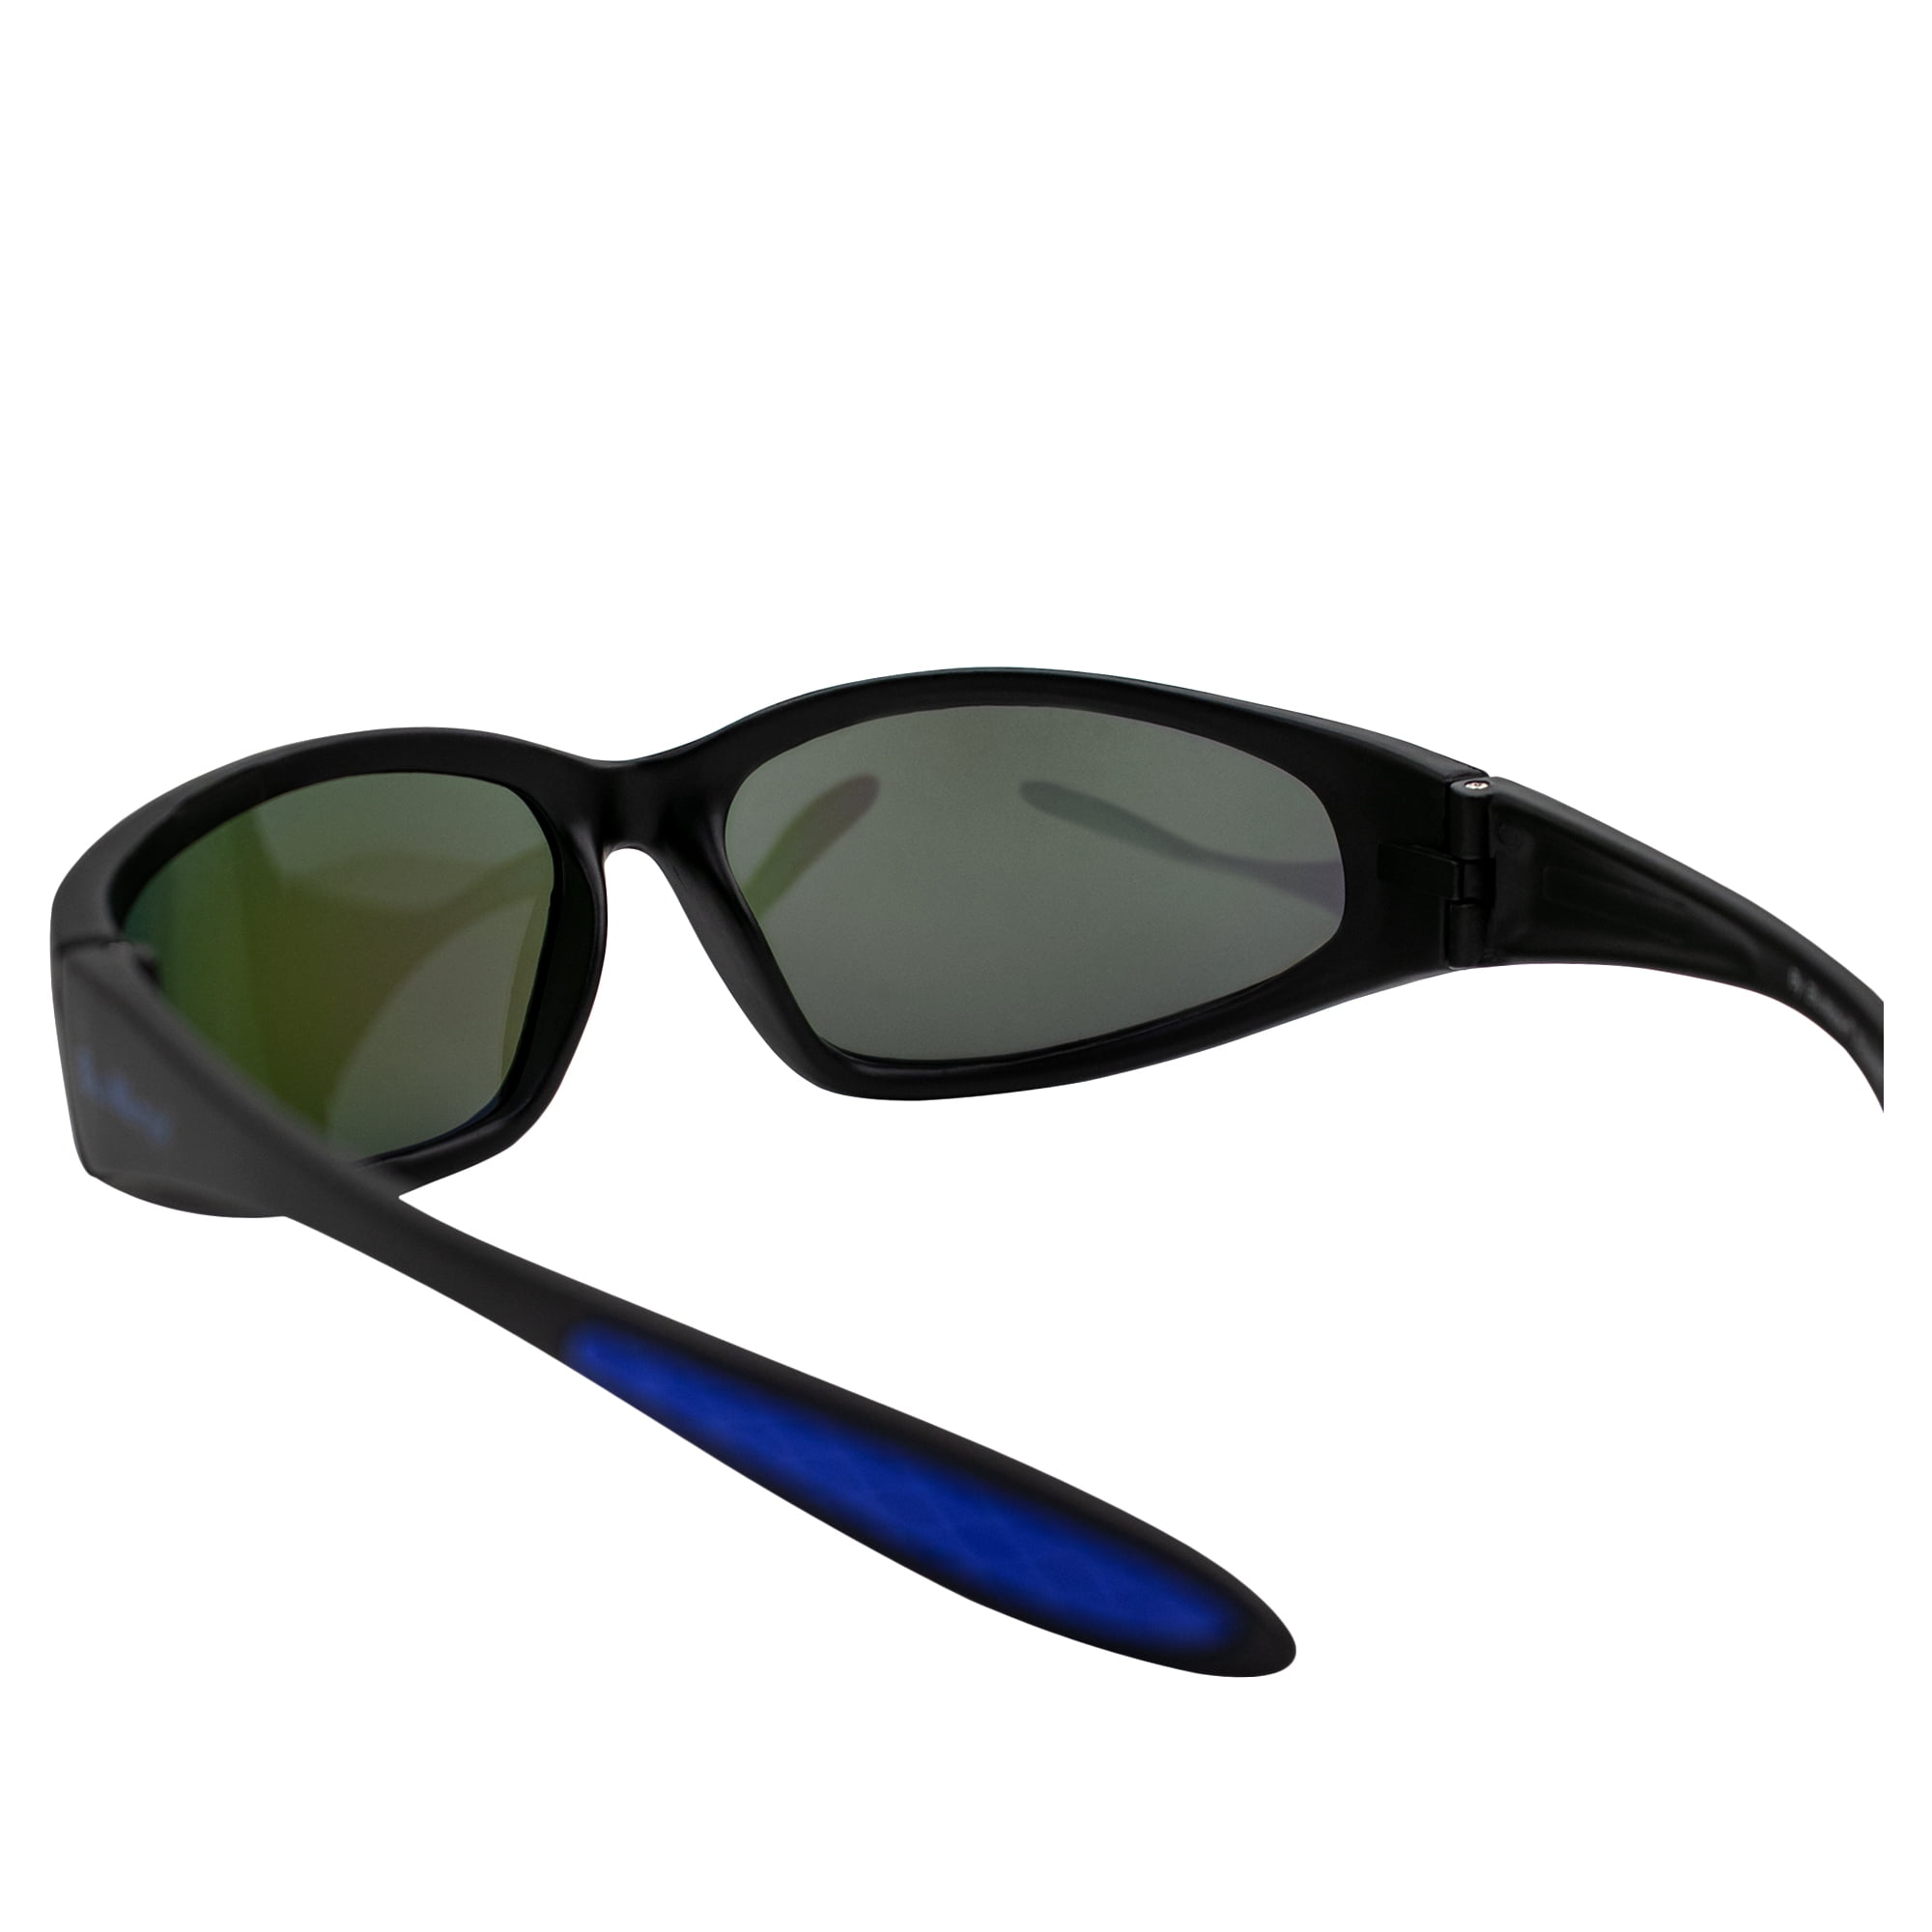 BluWater Samson 2 G-Tech Marine Lens Polarized Sunglasses for Men Black  Frame Boating, Watersports & Fishing Glasses Scratch-Resistant 